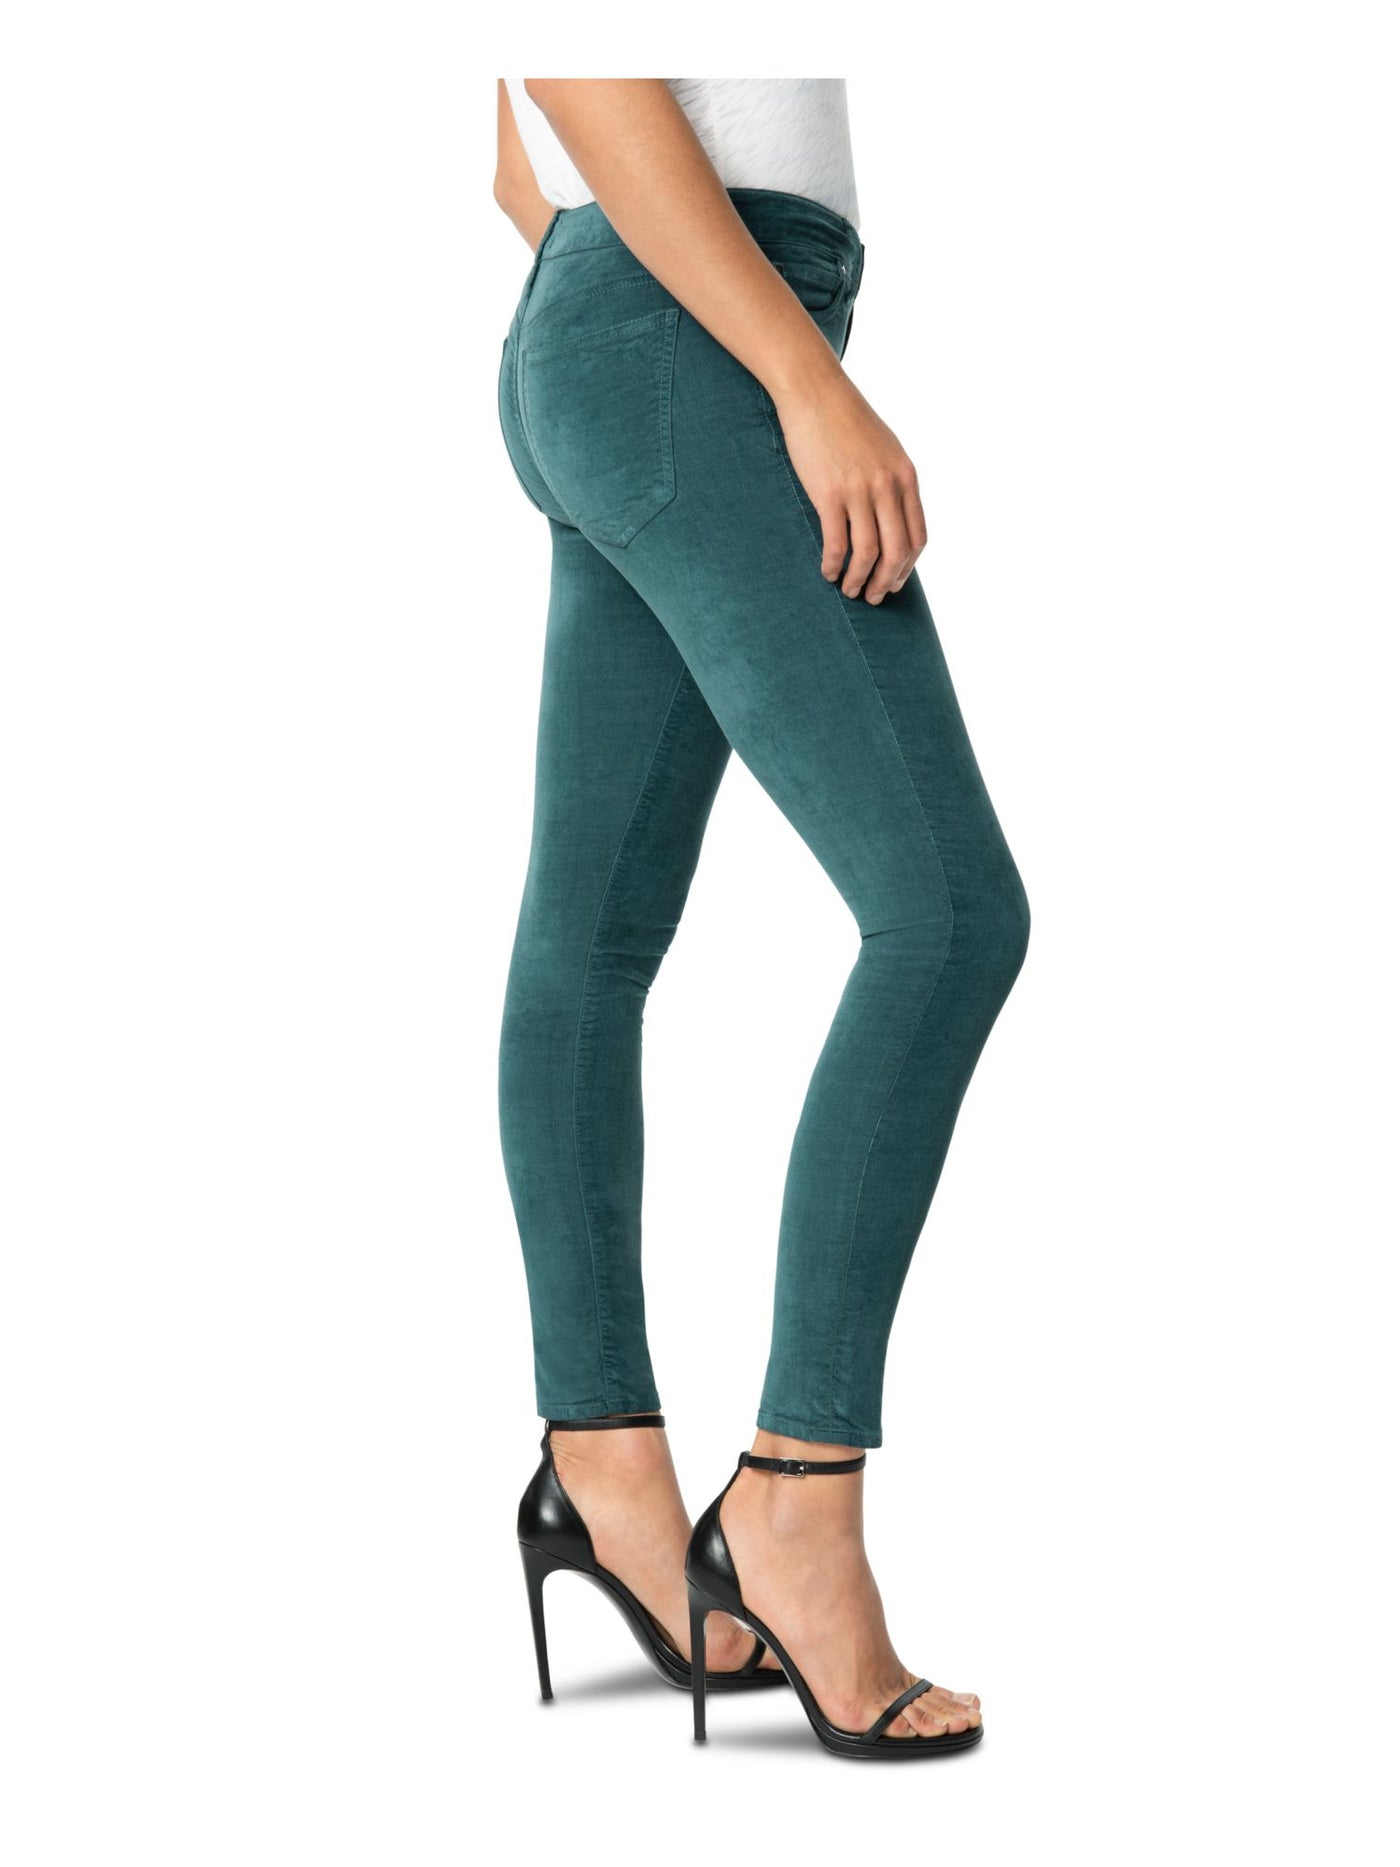 JOE'S Womens Green Cropped Pants Size: 26 Waist